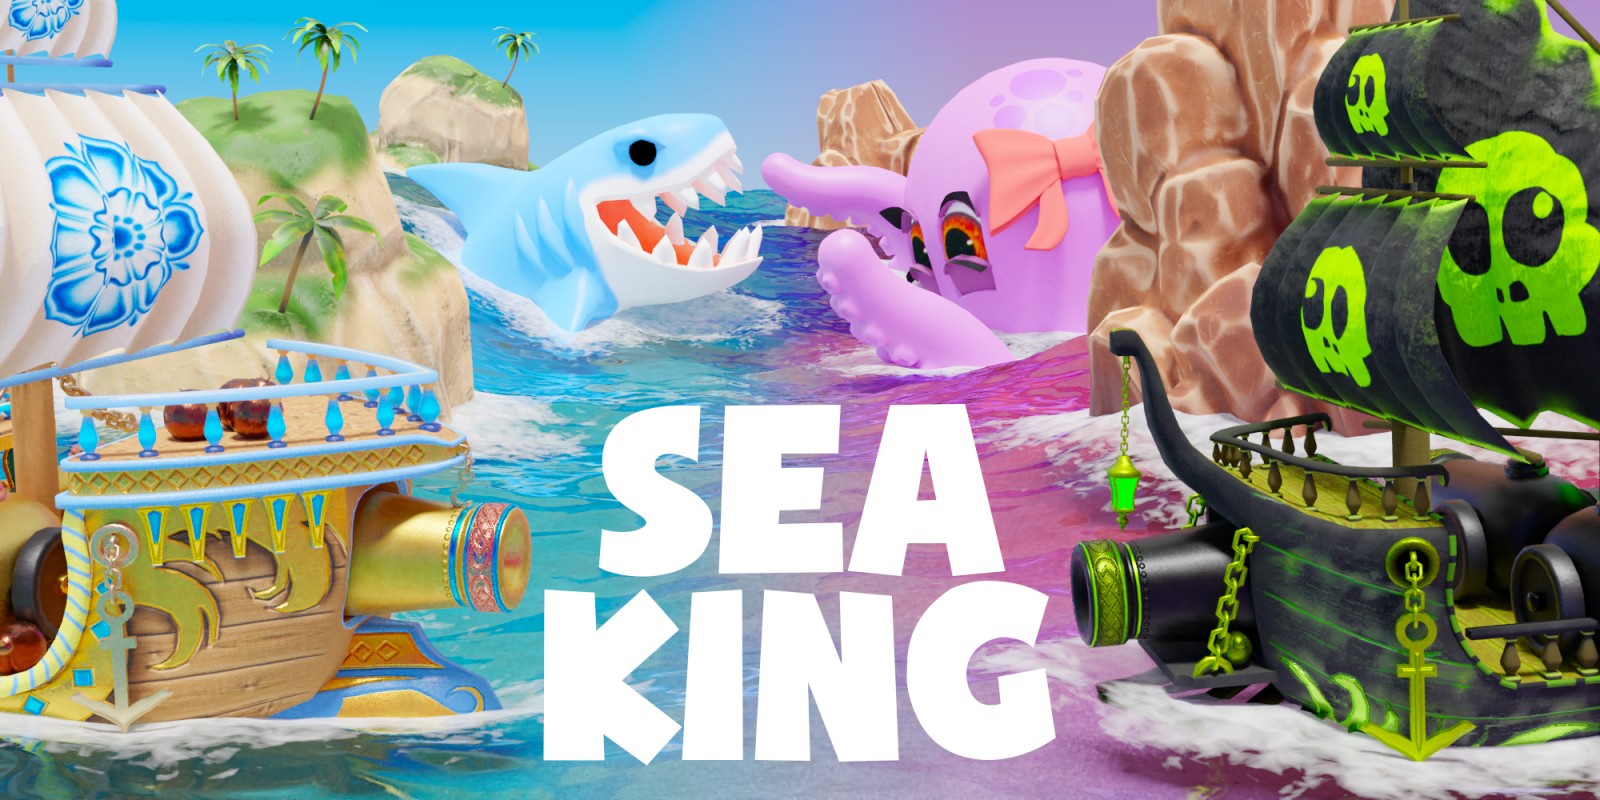 ocean king 2 download game